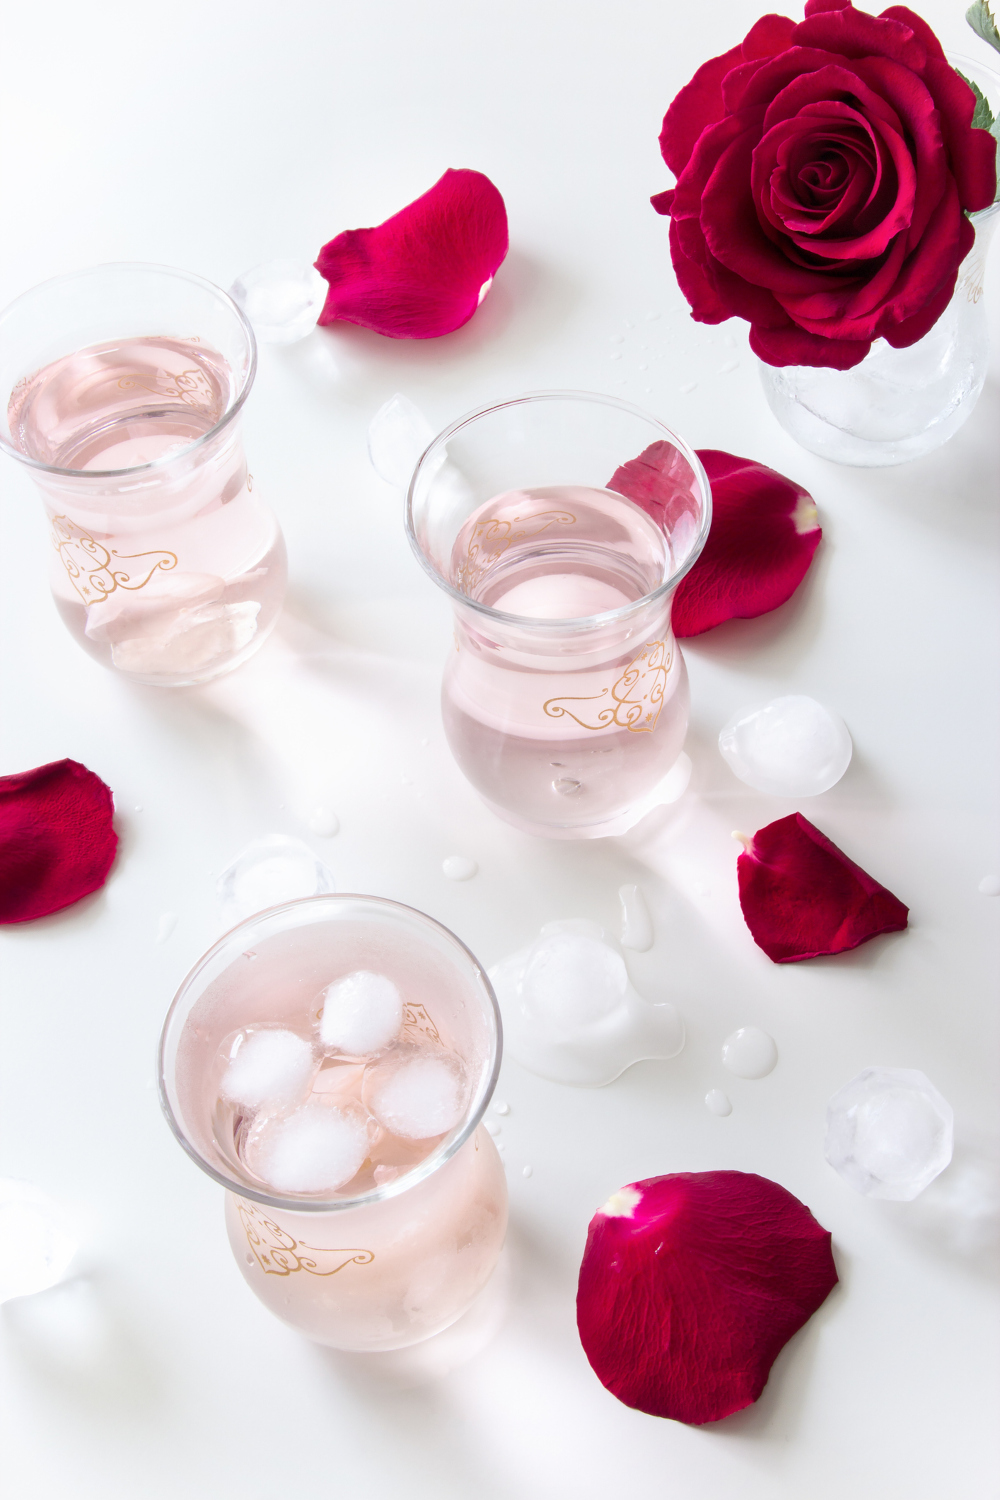 Rose petal lemonade